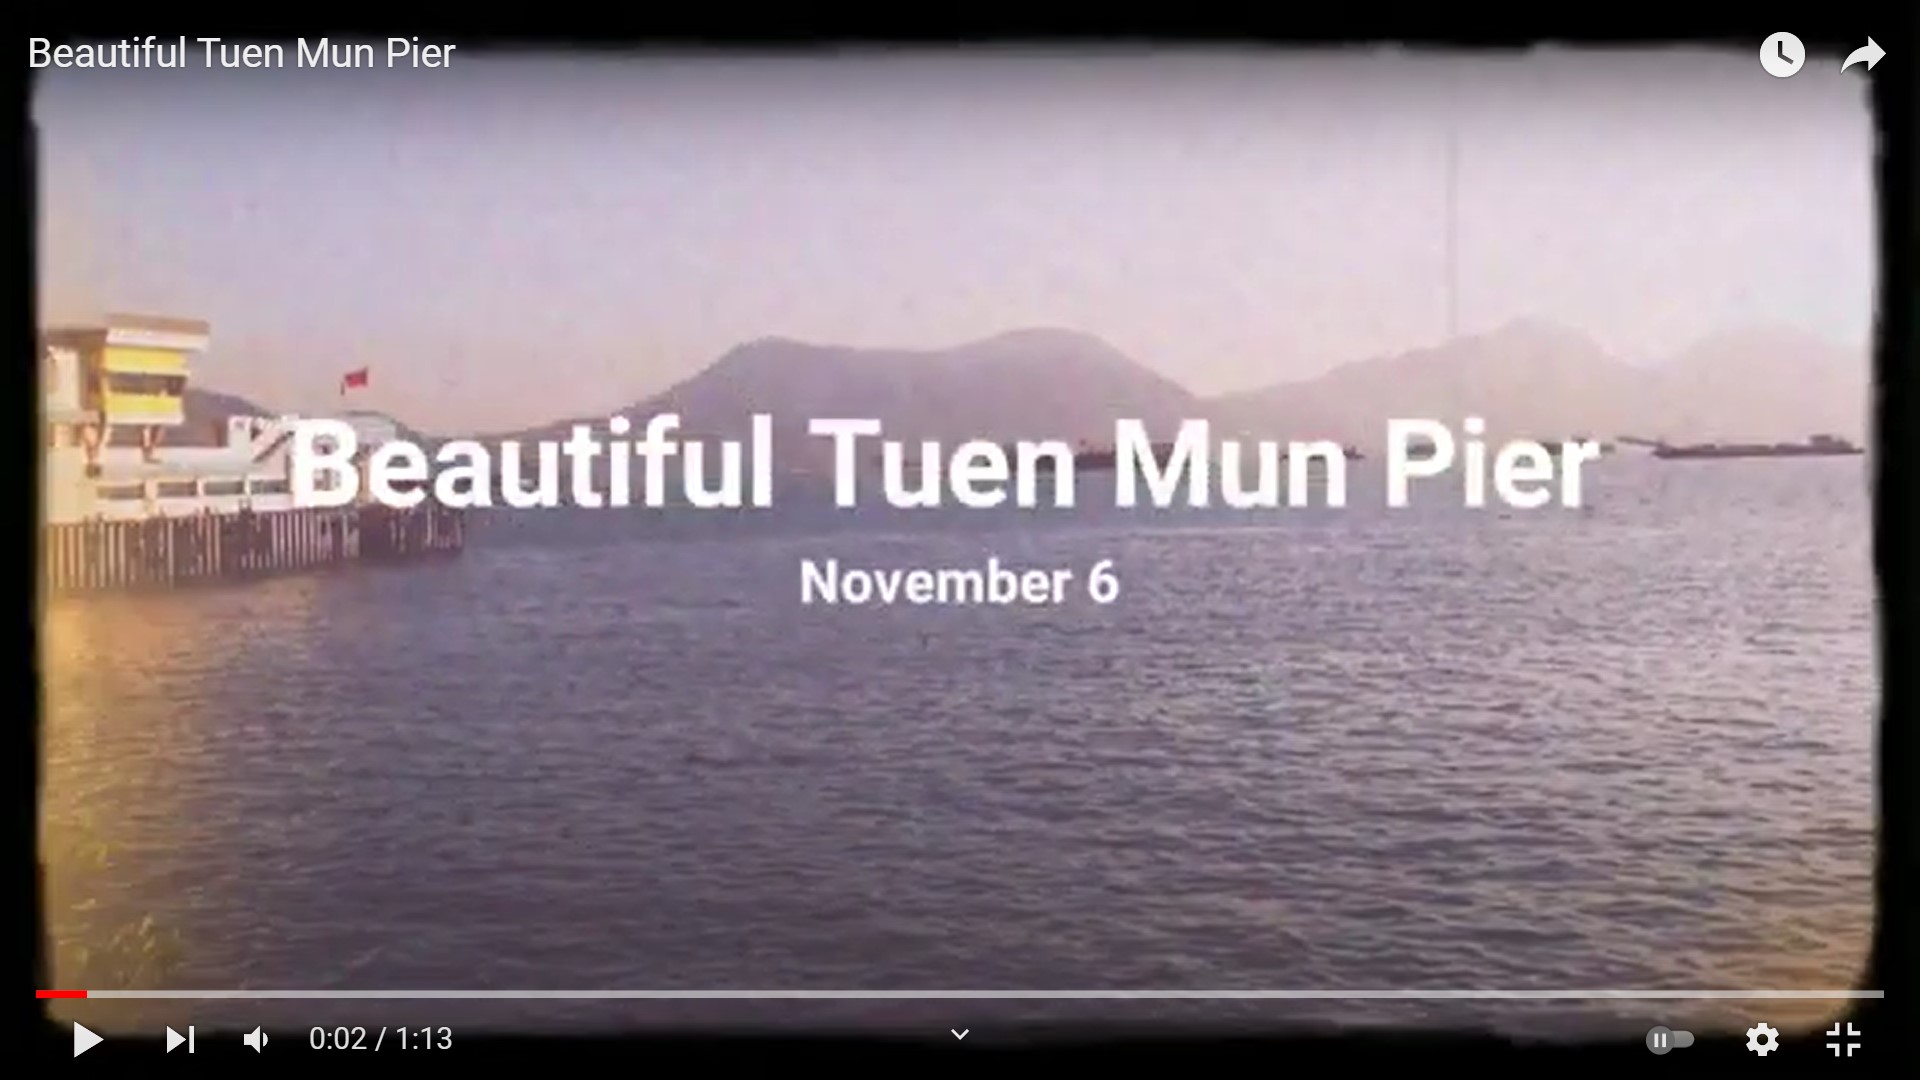 “Beautiful Tuen Mun Pier” snapshots video of Frank